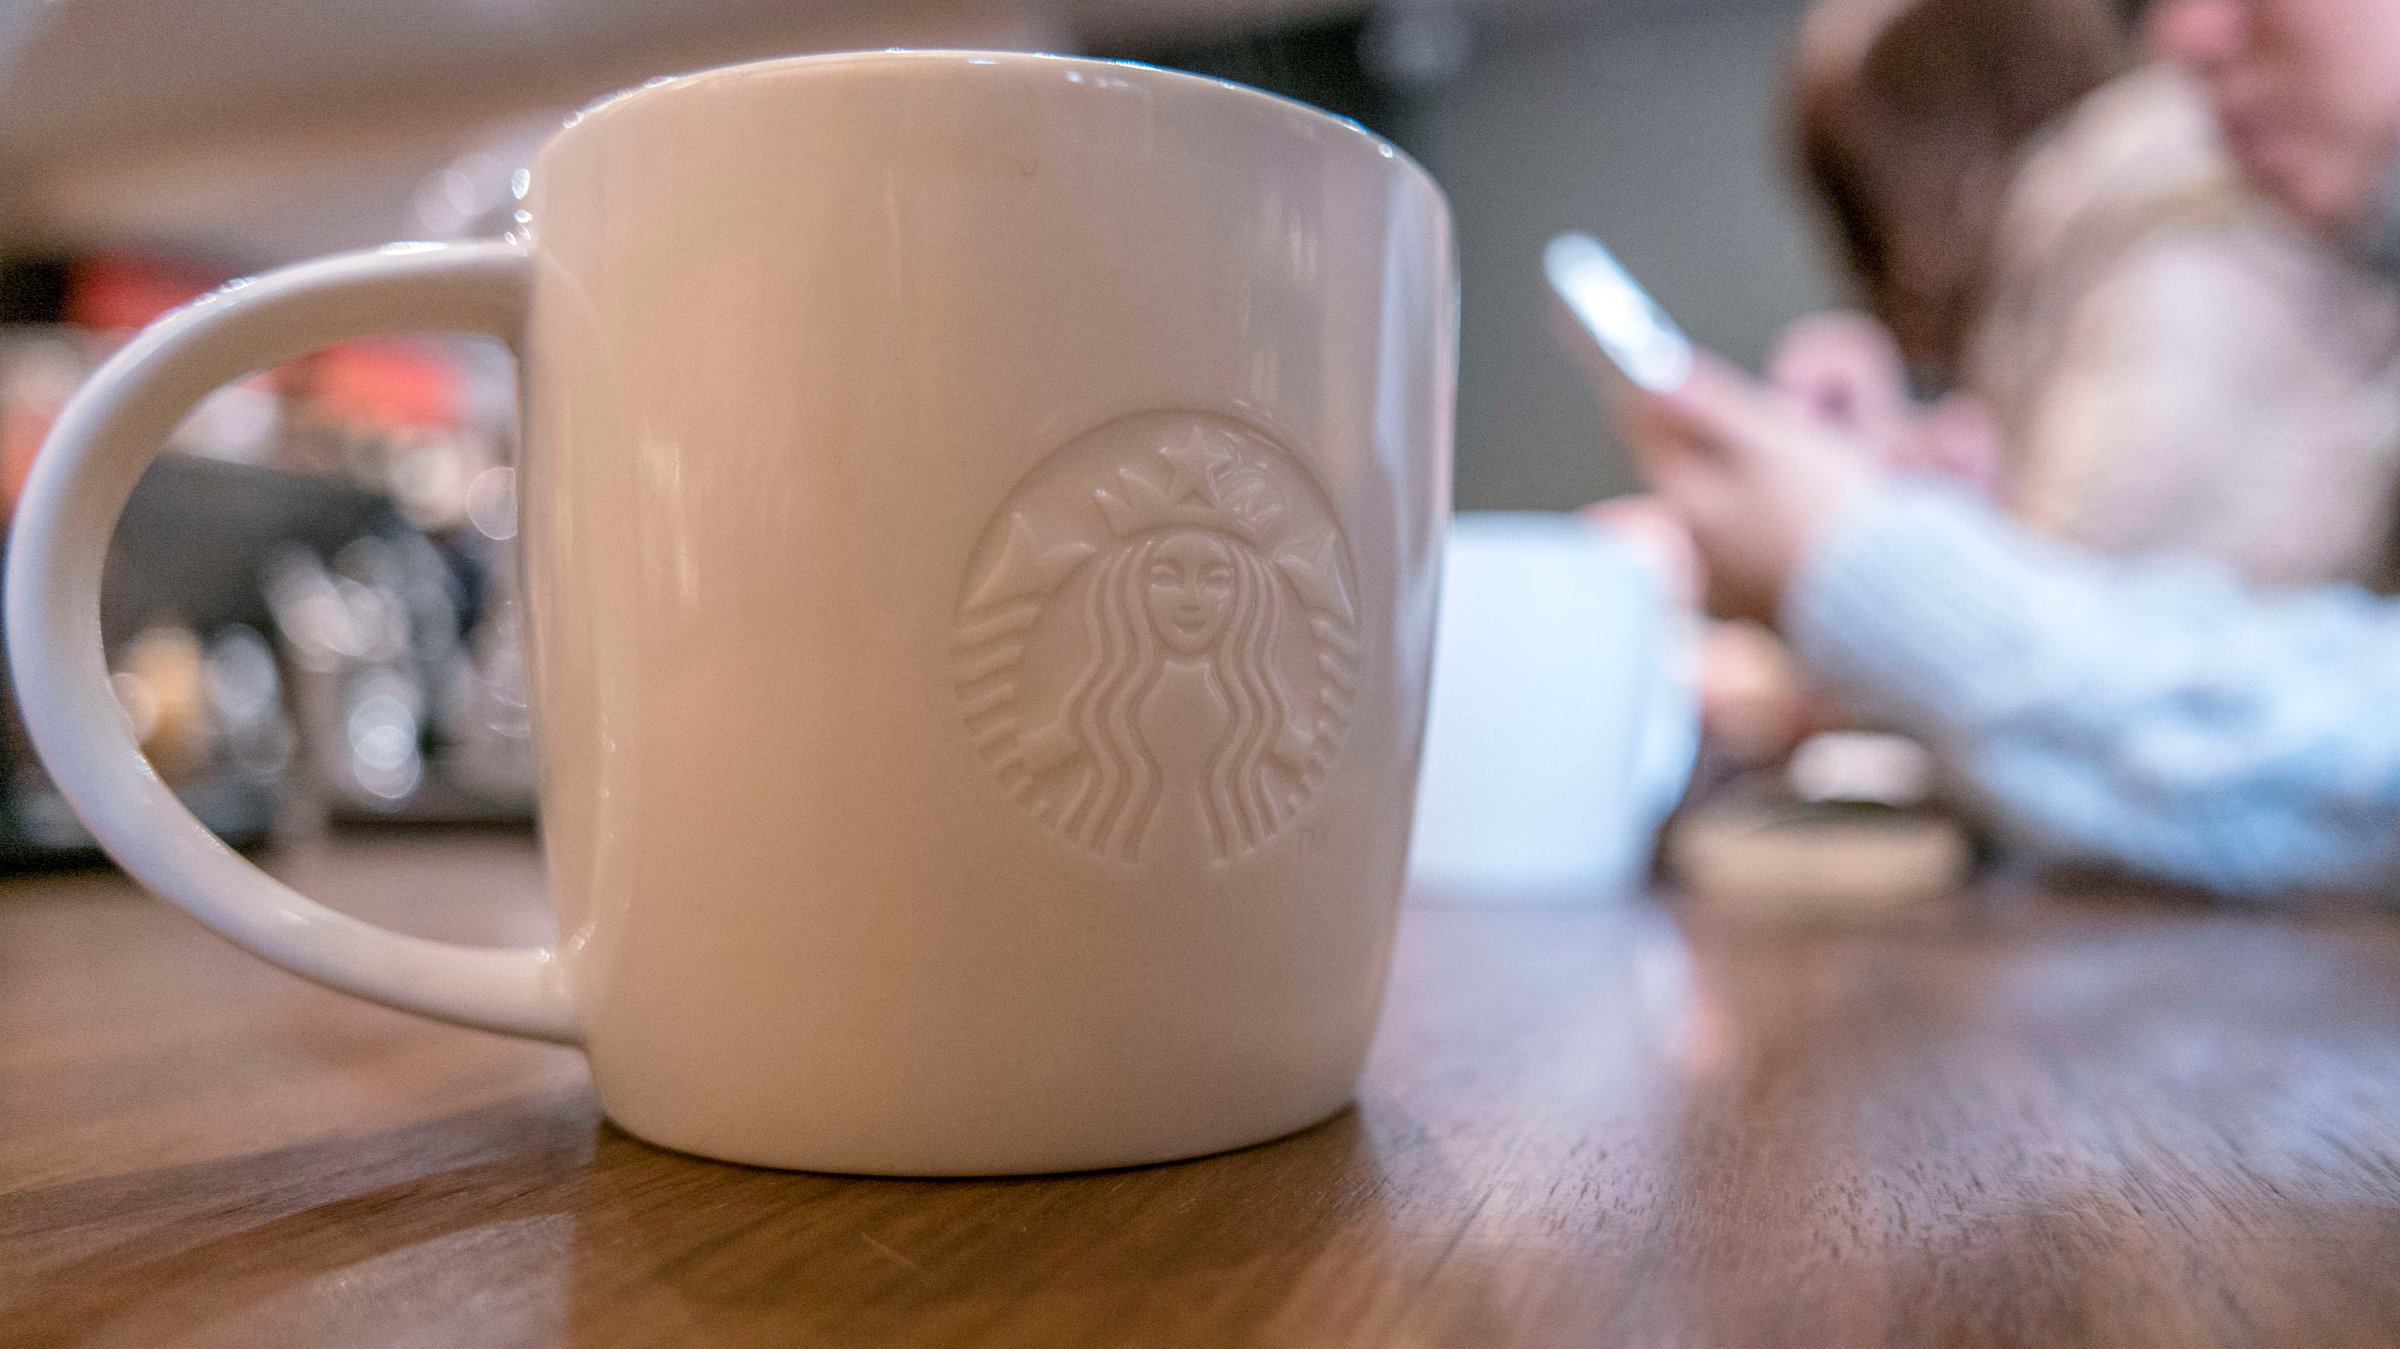 Logo of Starbucks on a coffee mug.